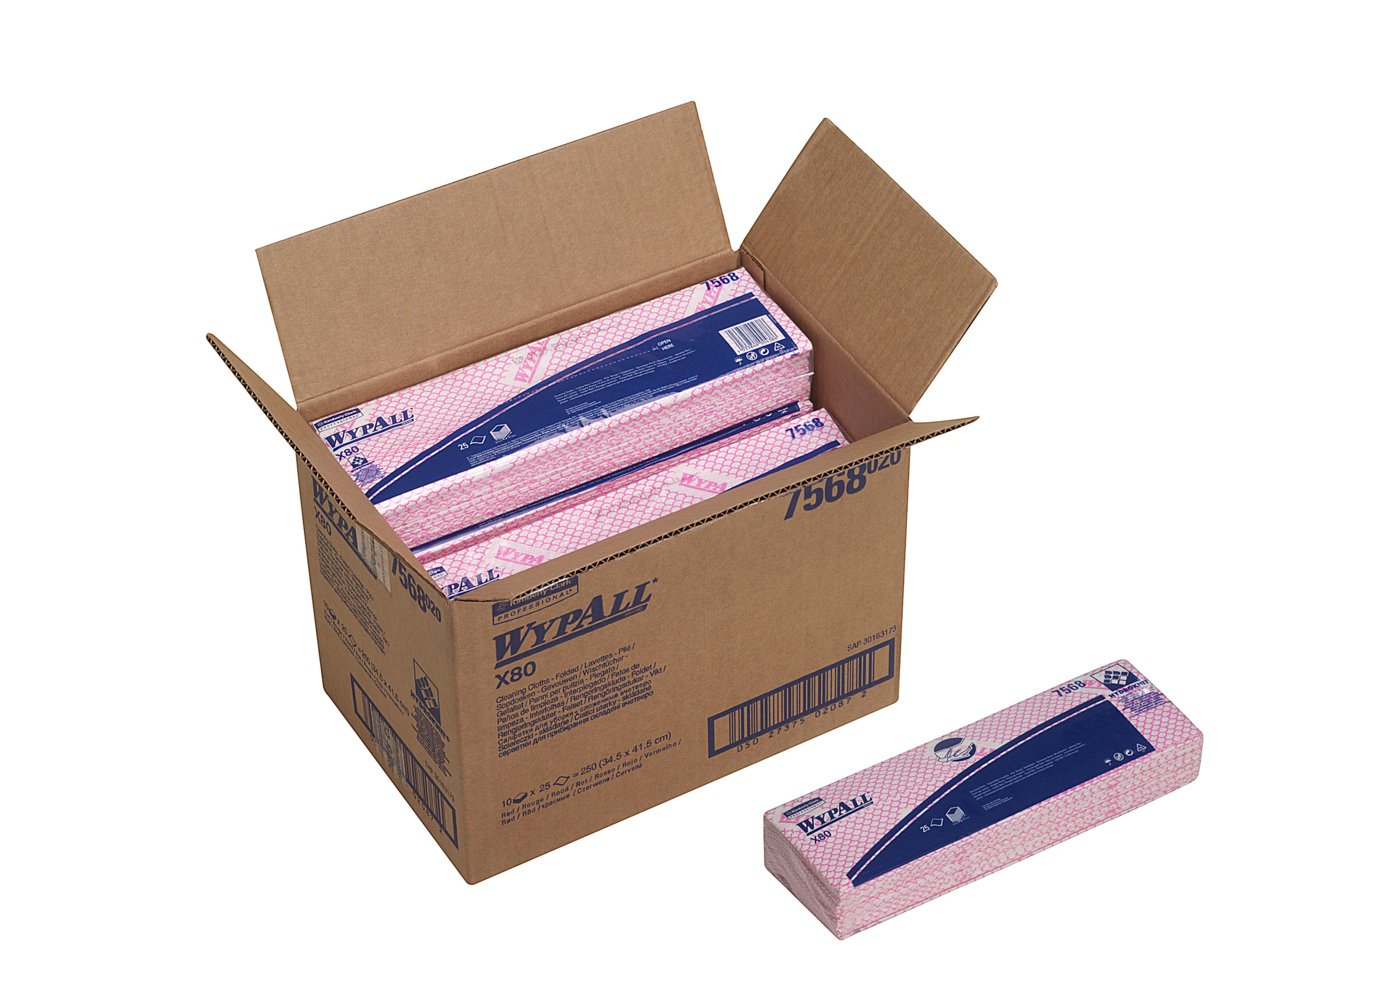 WypAll® X80 Farbcodierte Reinigungstücher 7568 – Reinigungstücher Rot – 10 Packungen x 25 Reinigungstücher für hohe Beanspruchung (insges. 250) - 7568